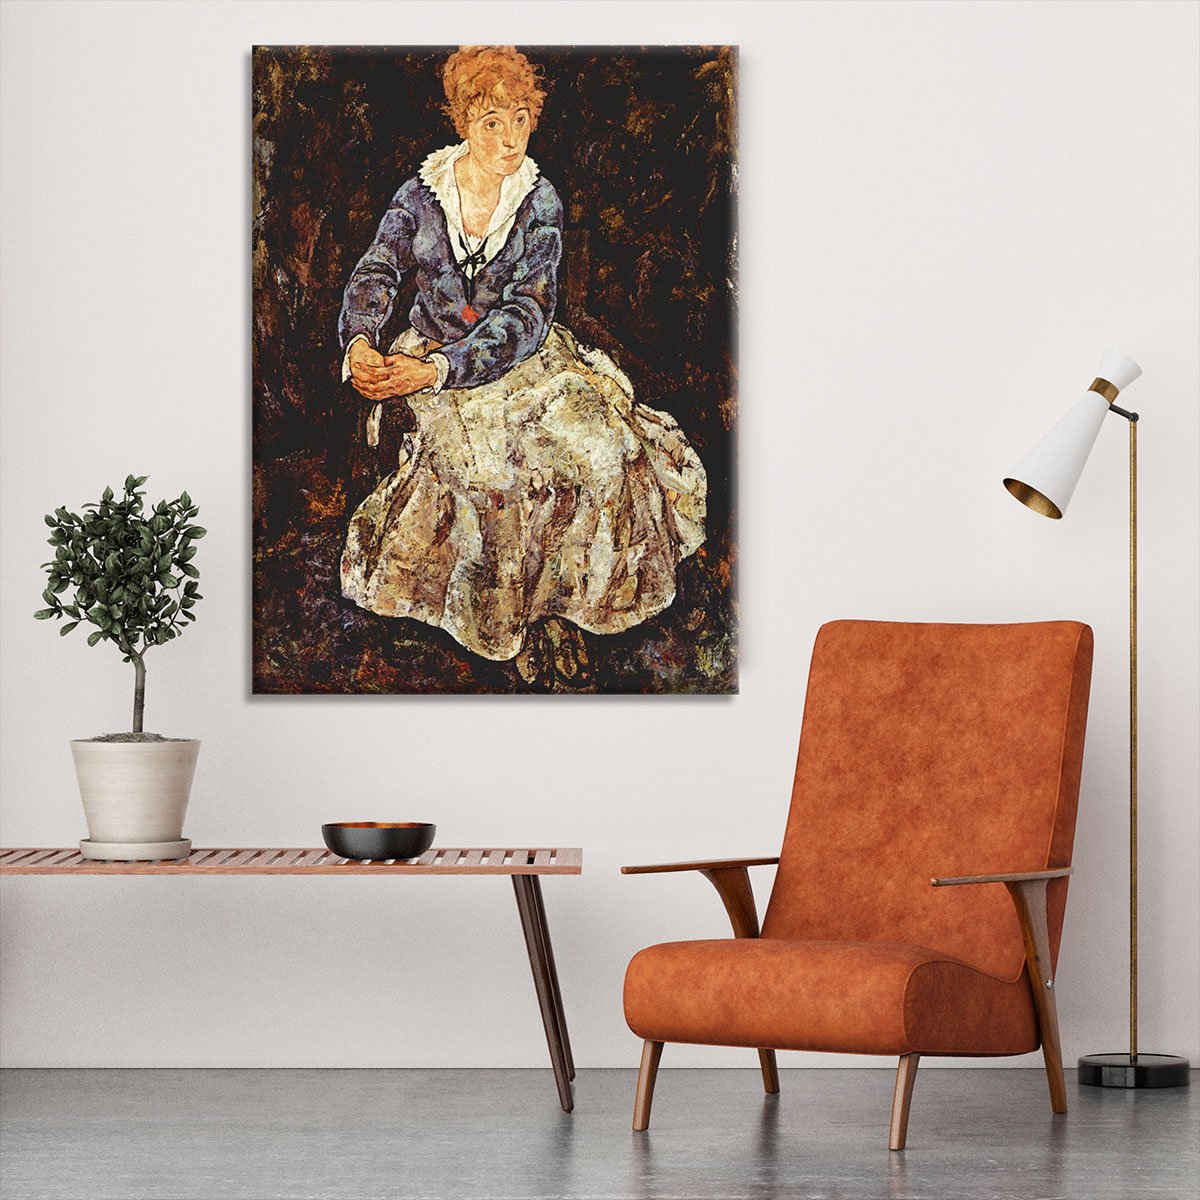 Portrait of Edith Egon Schiele sitting by Egon Schiele Canvas Print or Poster